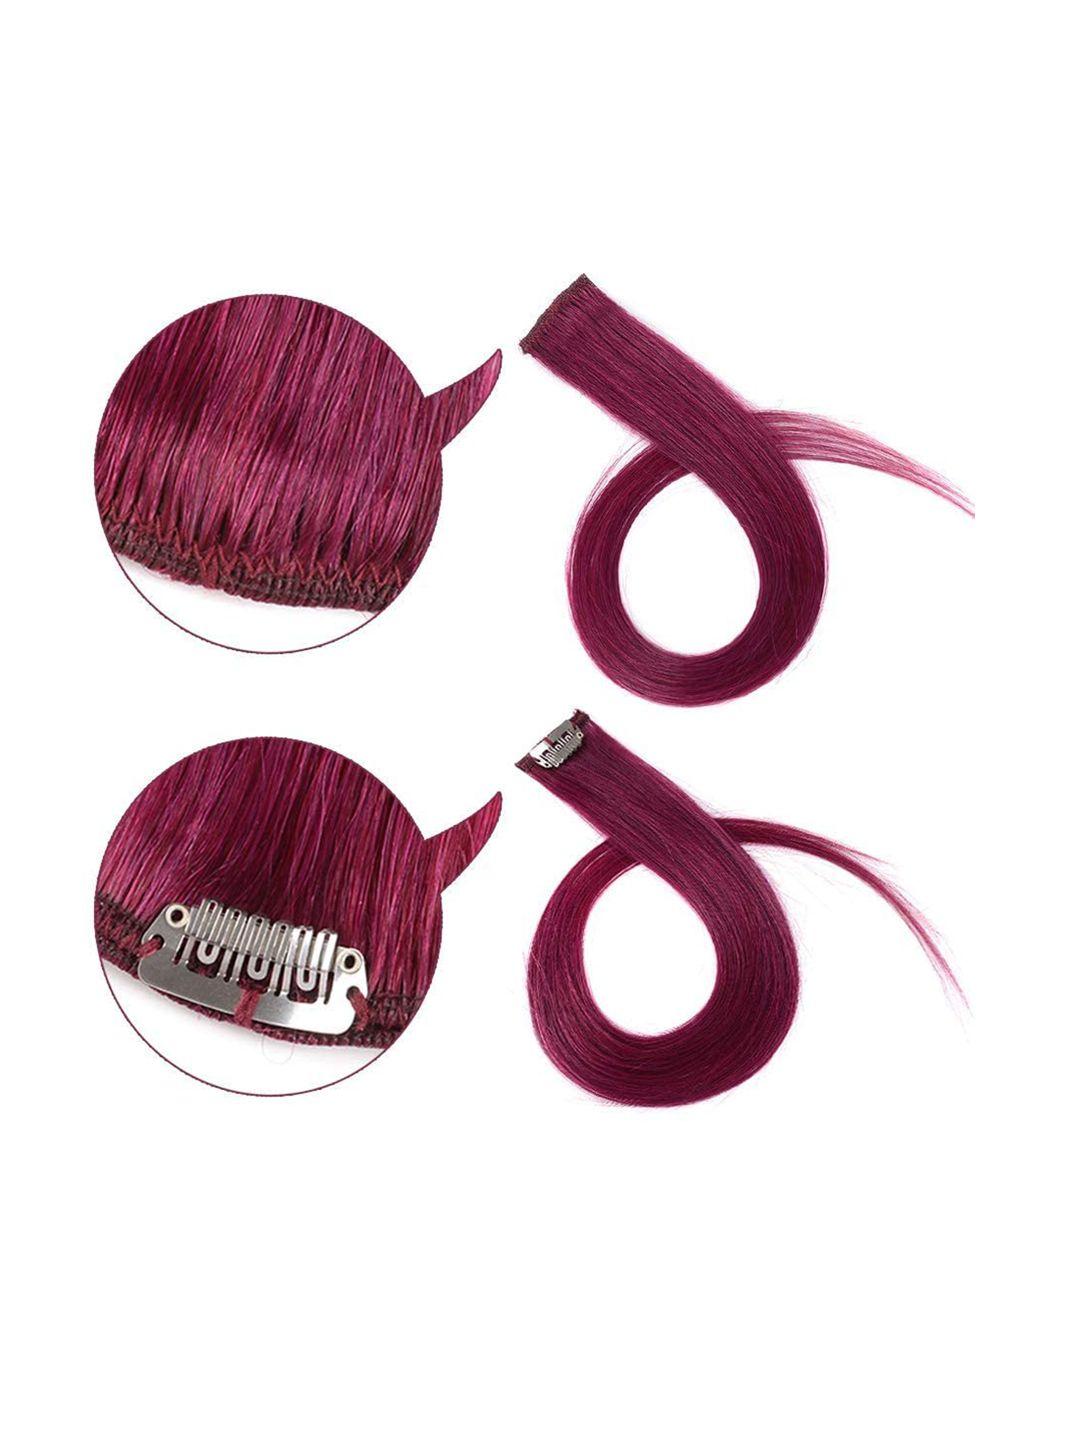 chanderkash 2 pieces straight single clip hair streak color hair extension - 18 inches each